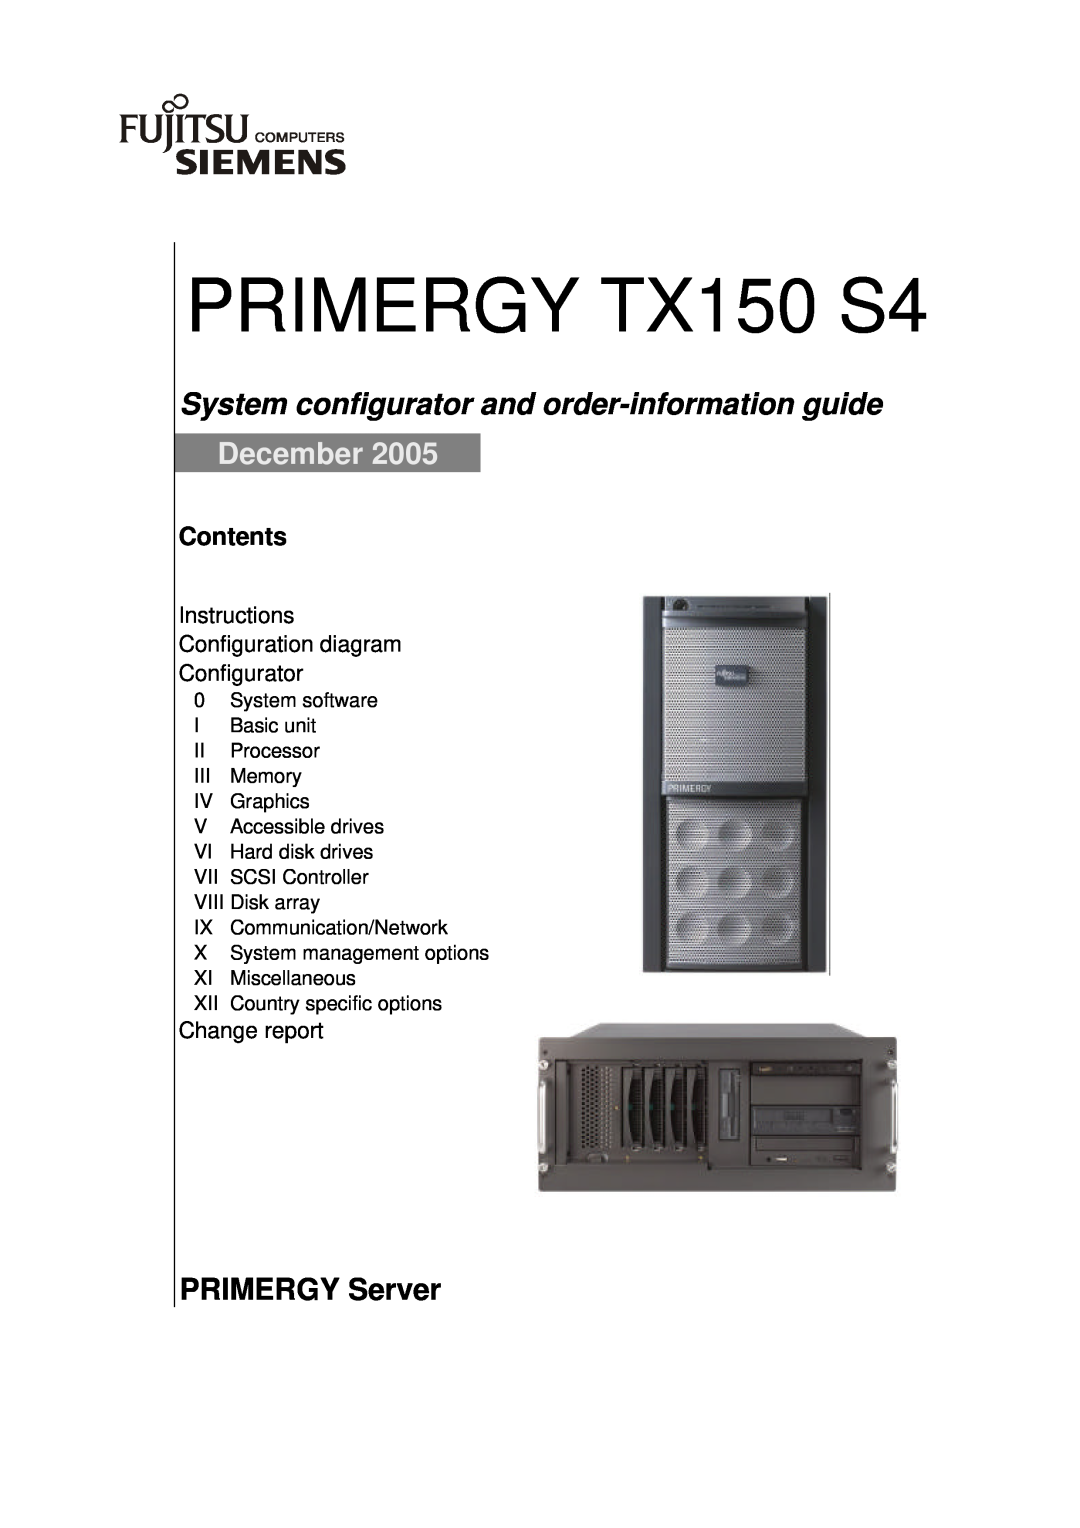 Fujitsu manual PRIMERGY TX150 S4, System configurator and order-information guide, December, PRIMERGY Server, Contents 